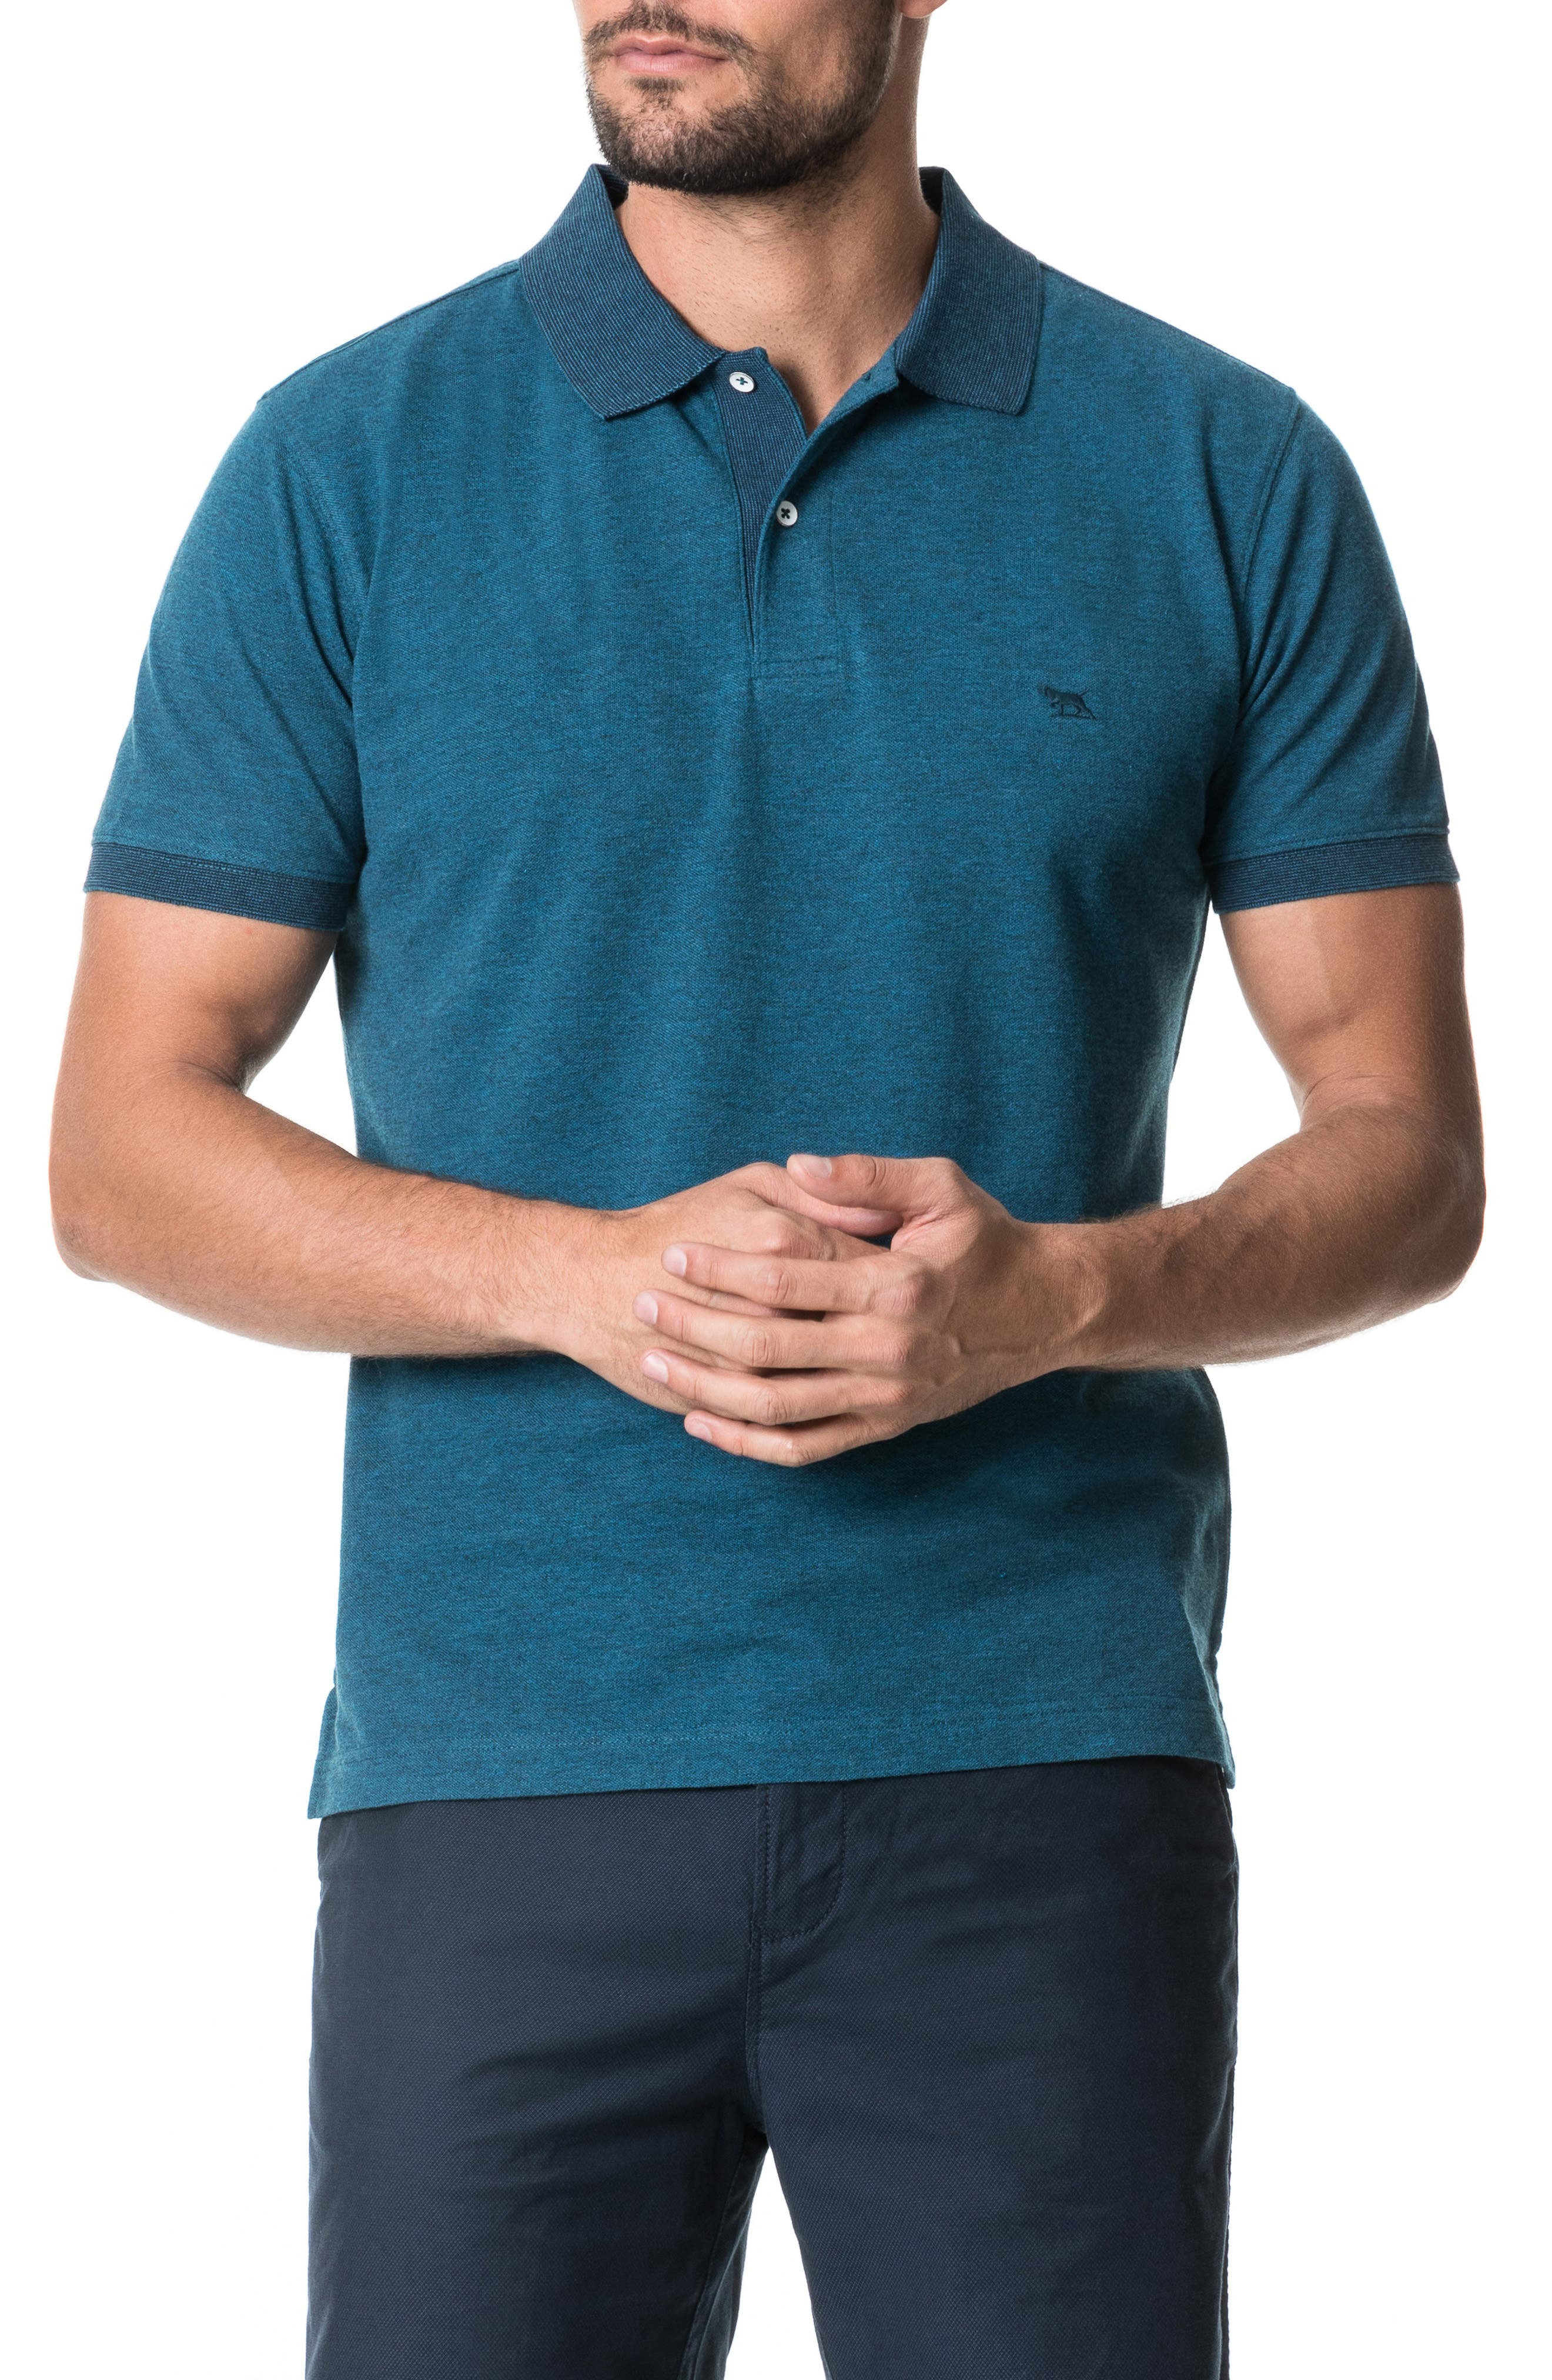 New Mens Polo Shirt Short Sleeve Plain Pique Top Designer Style Fit T Shirt Tee